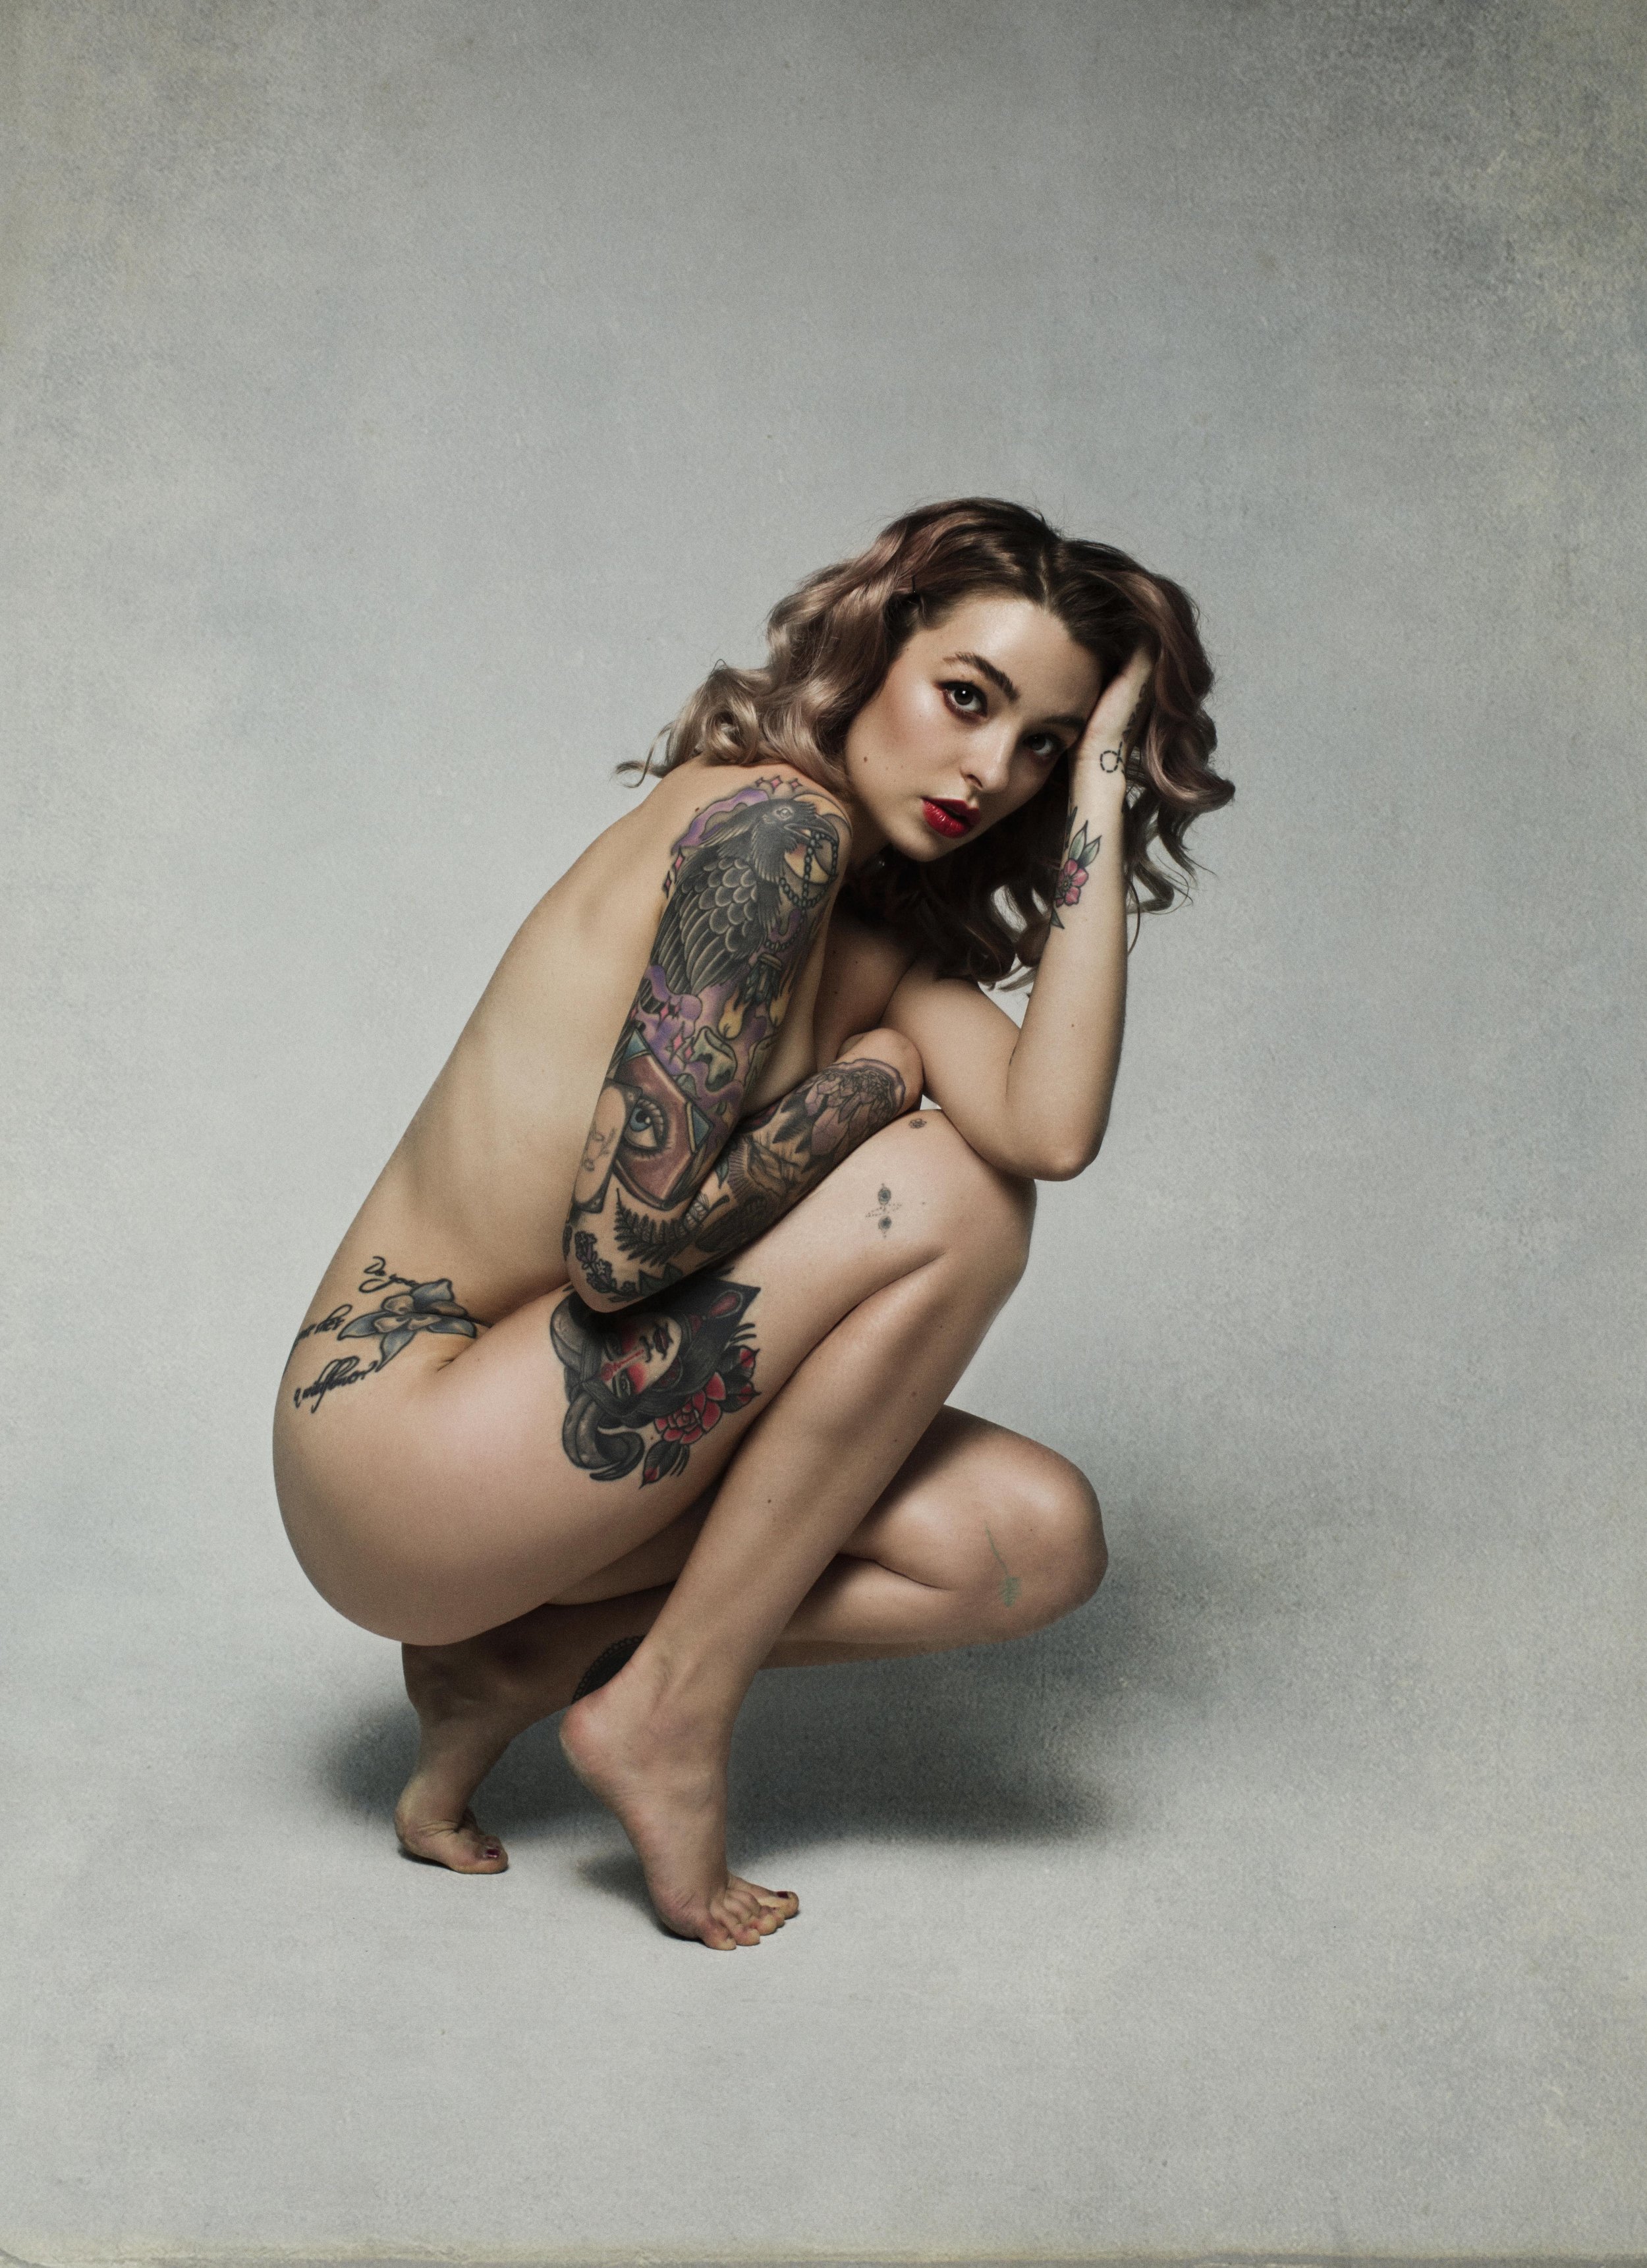  Fine Art nude portrait and boudoir portrait photographer in studio by Shannon Beauclair. 